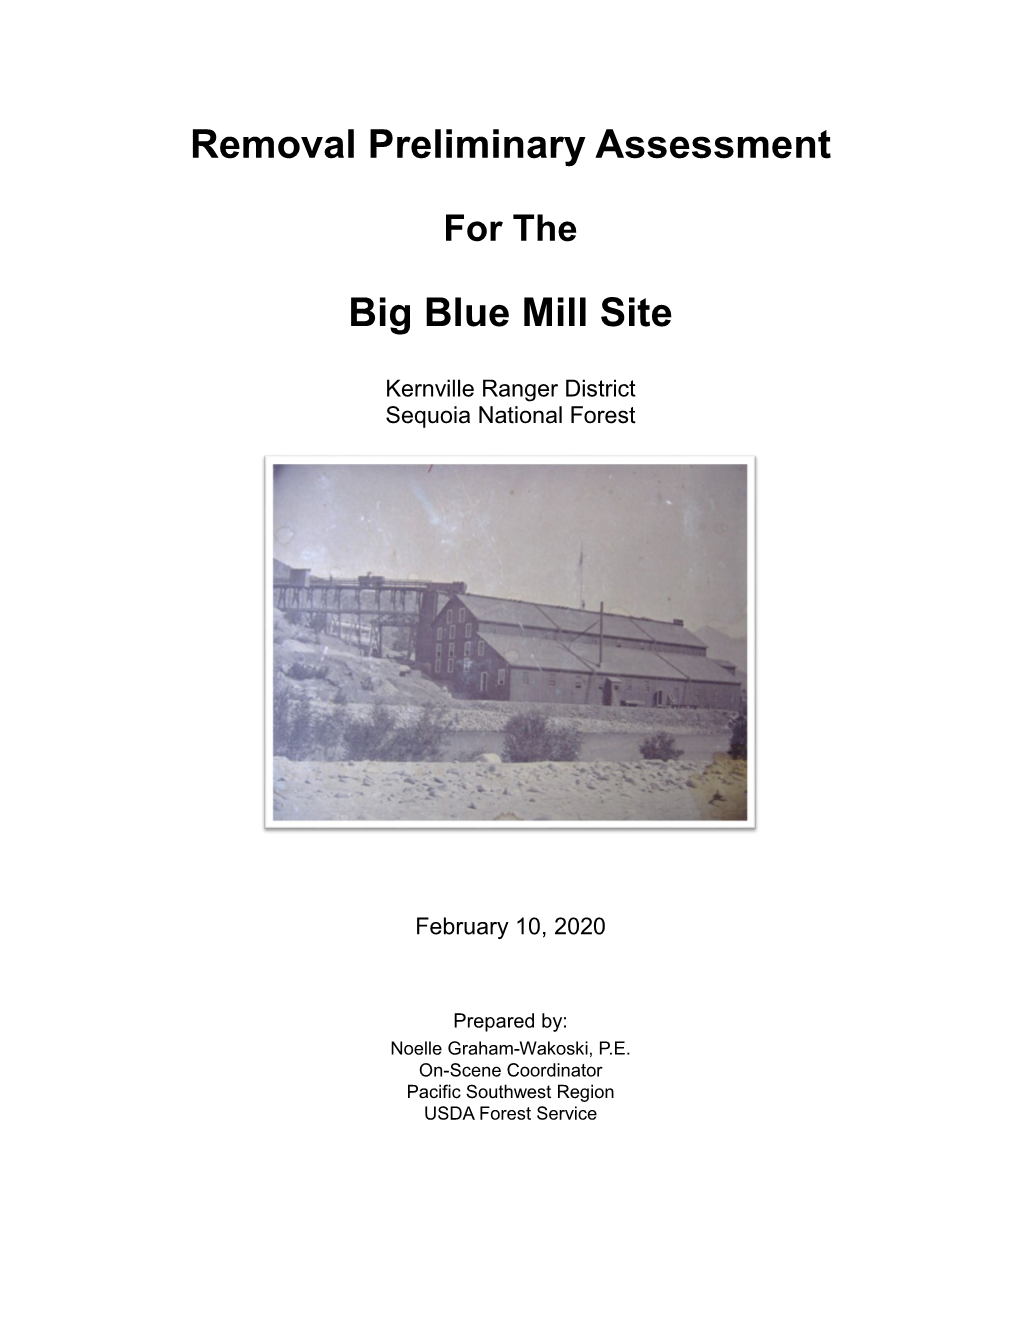 Big Blue Mill Peliminary Assessment